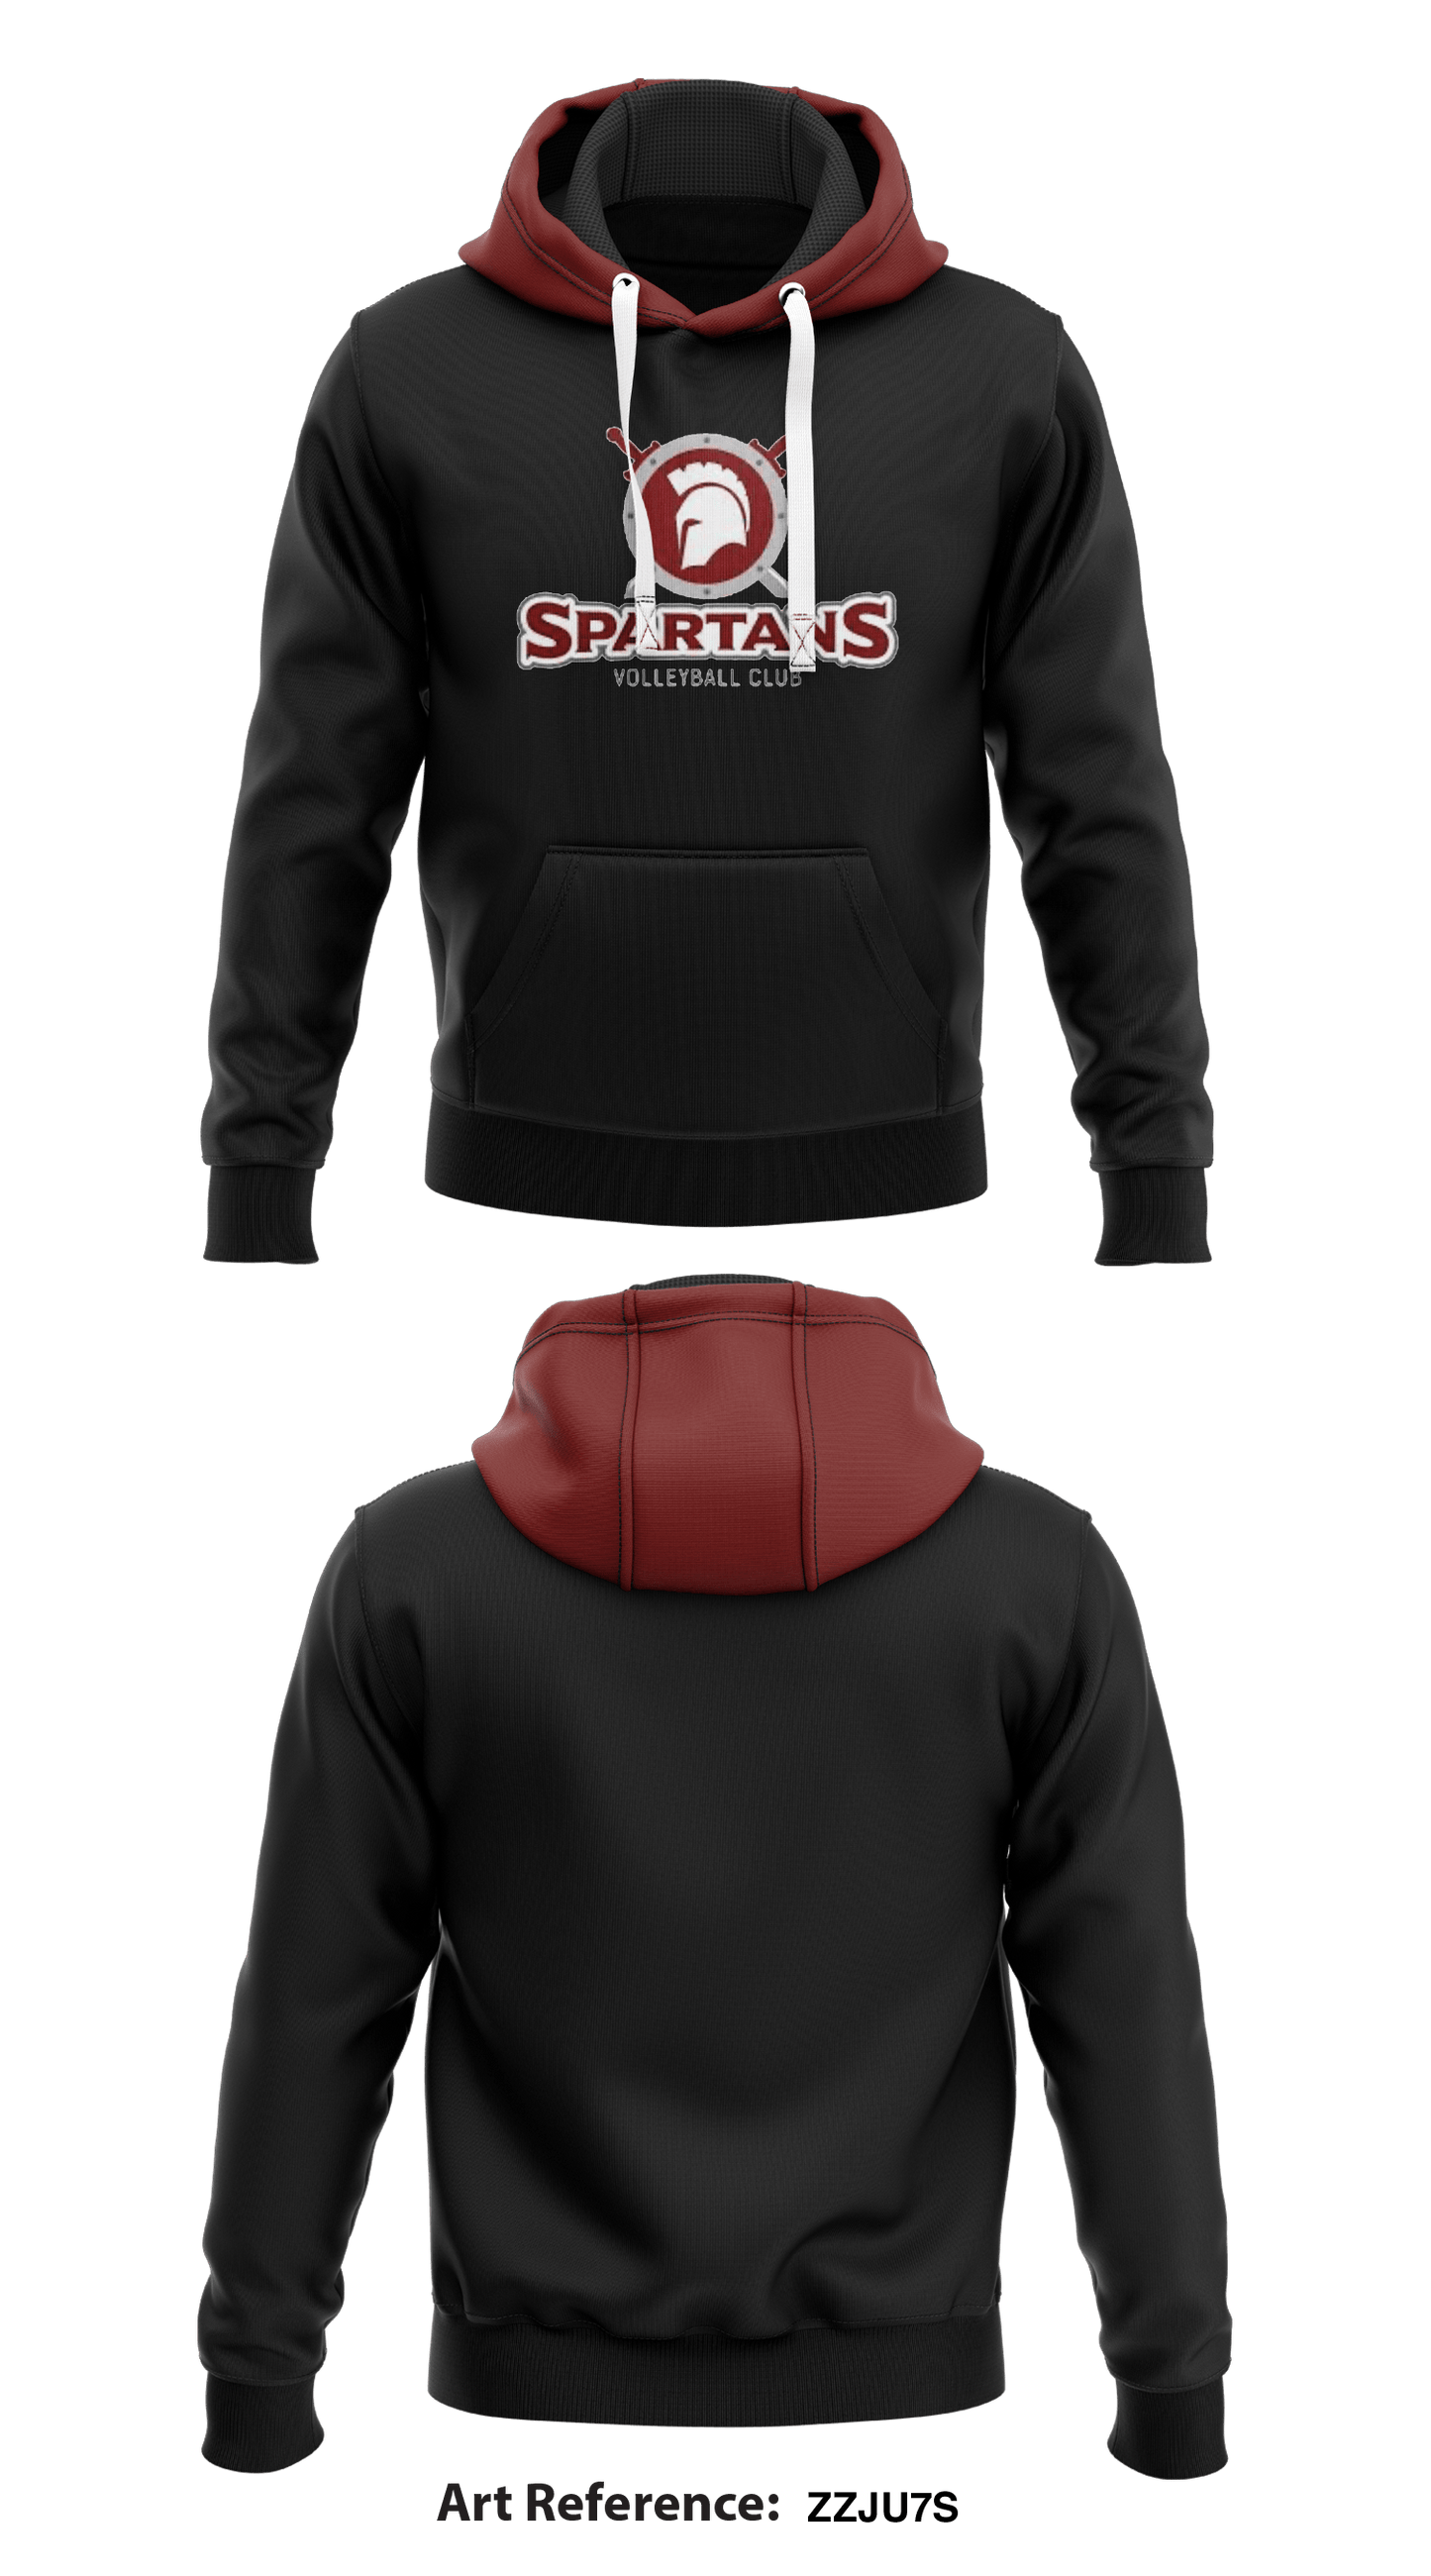 Spartans volleyball club Store 1 Core Men's Hooded Performance Sweatshirt - ZZjU7S